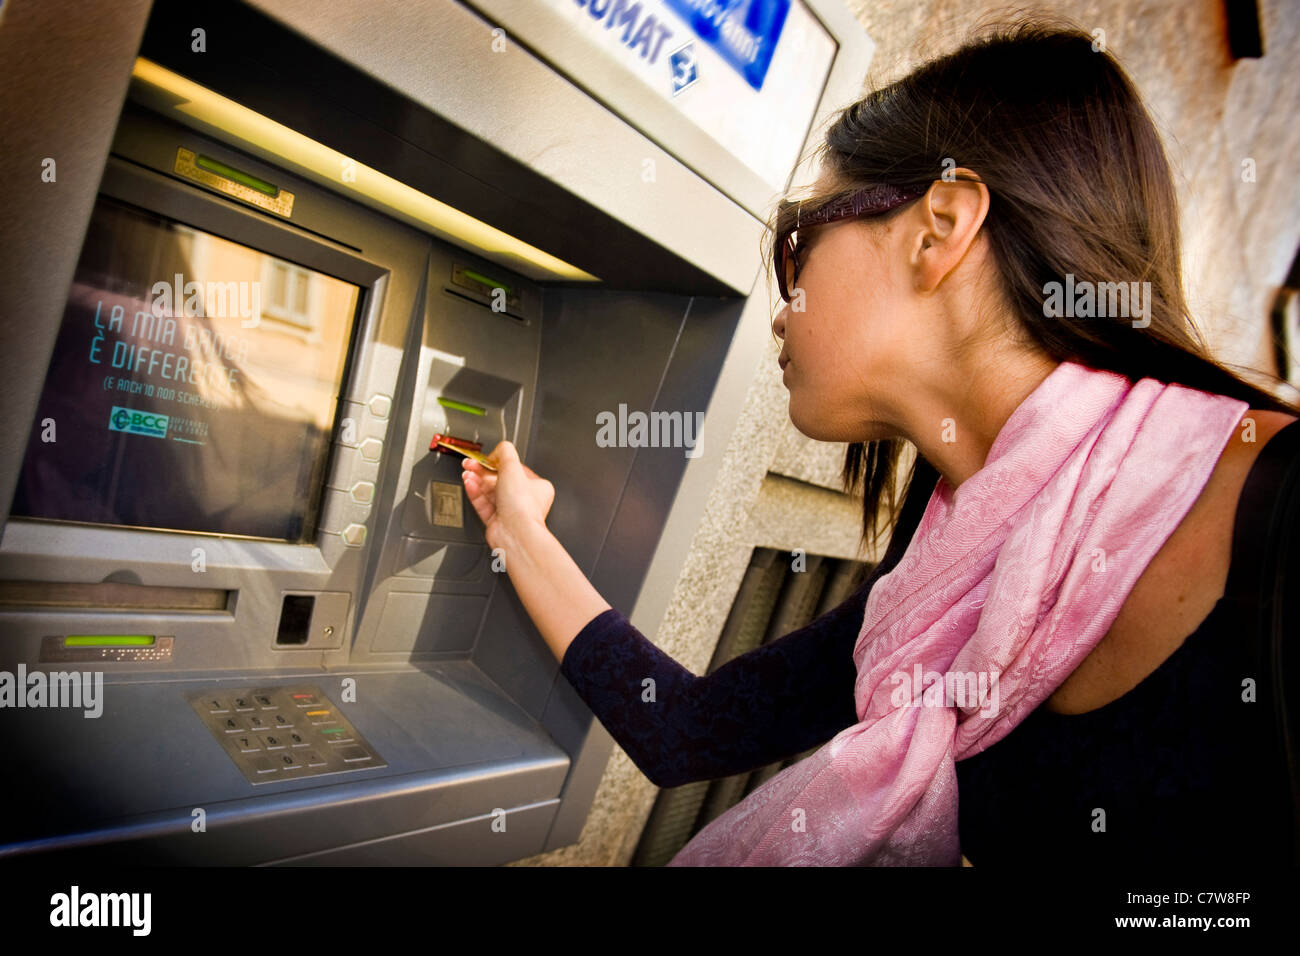 Woman using an ATM machine Stock Photo